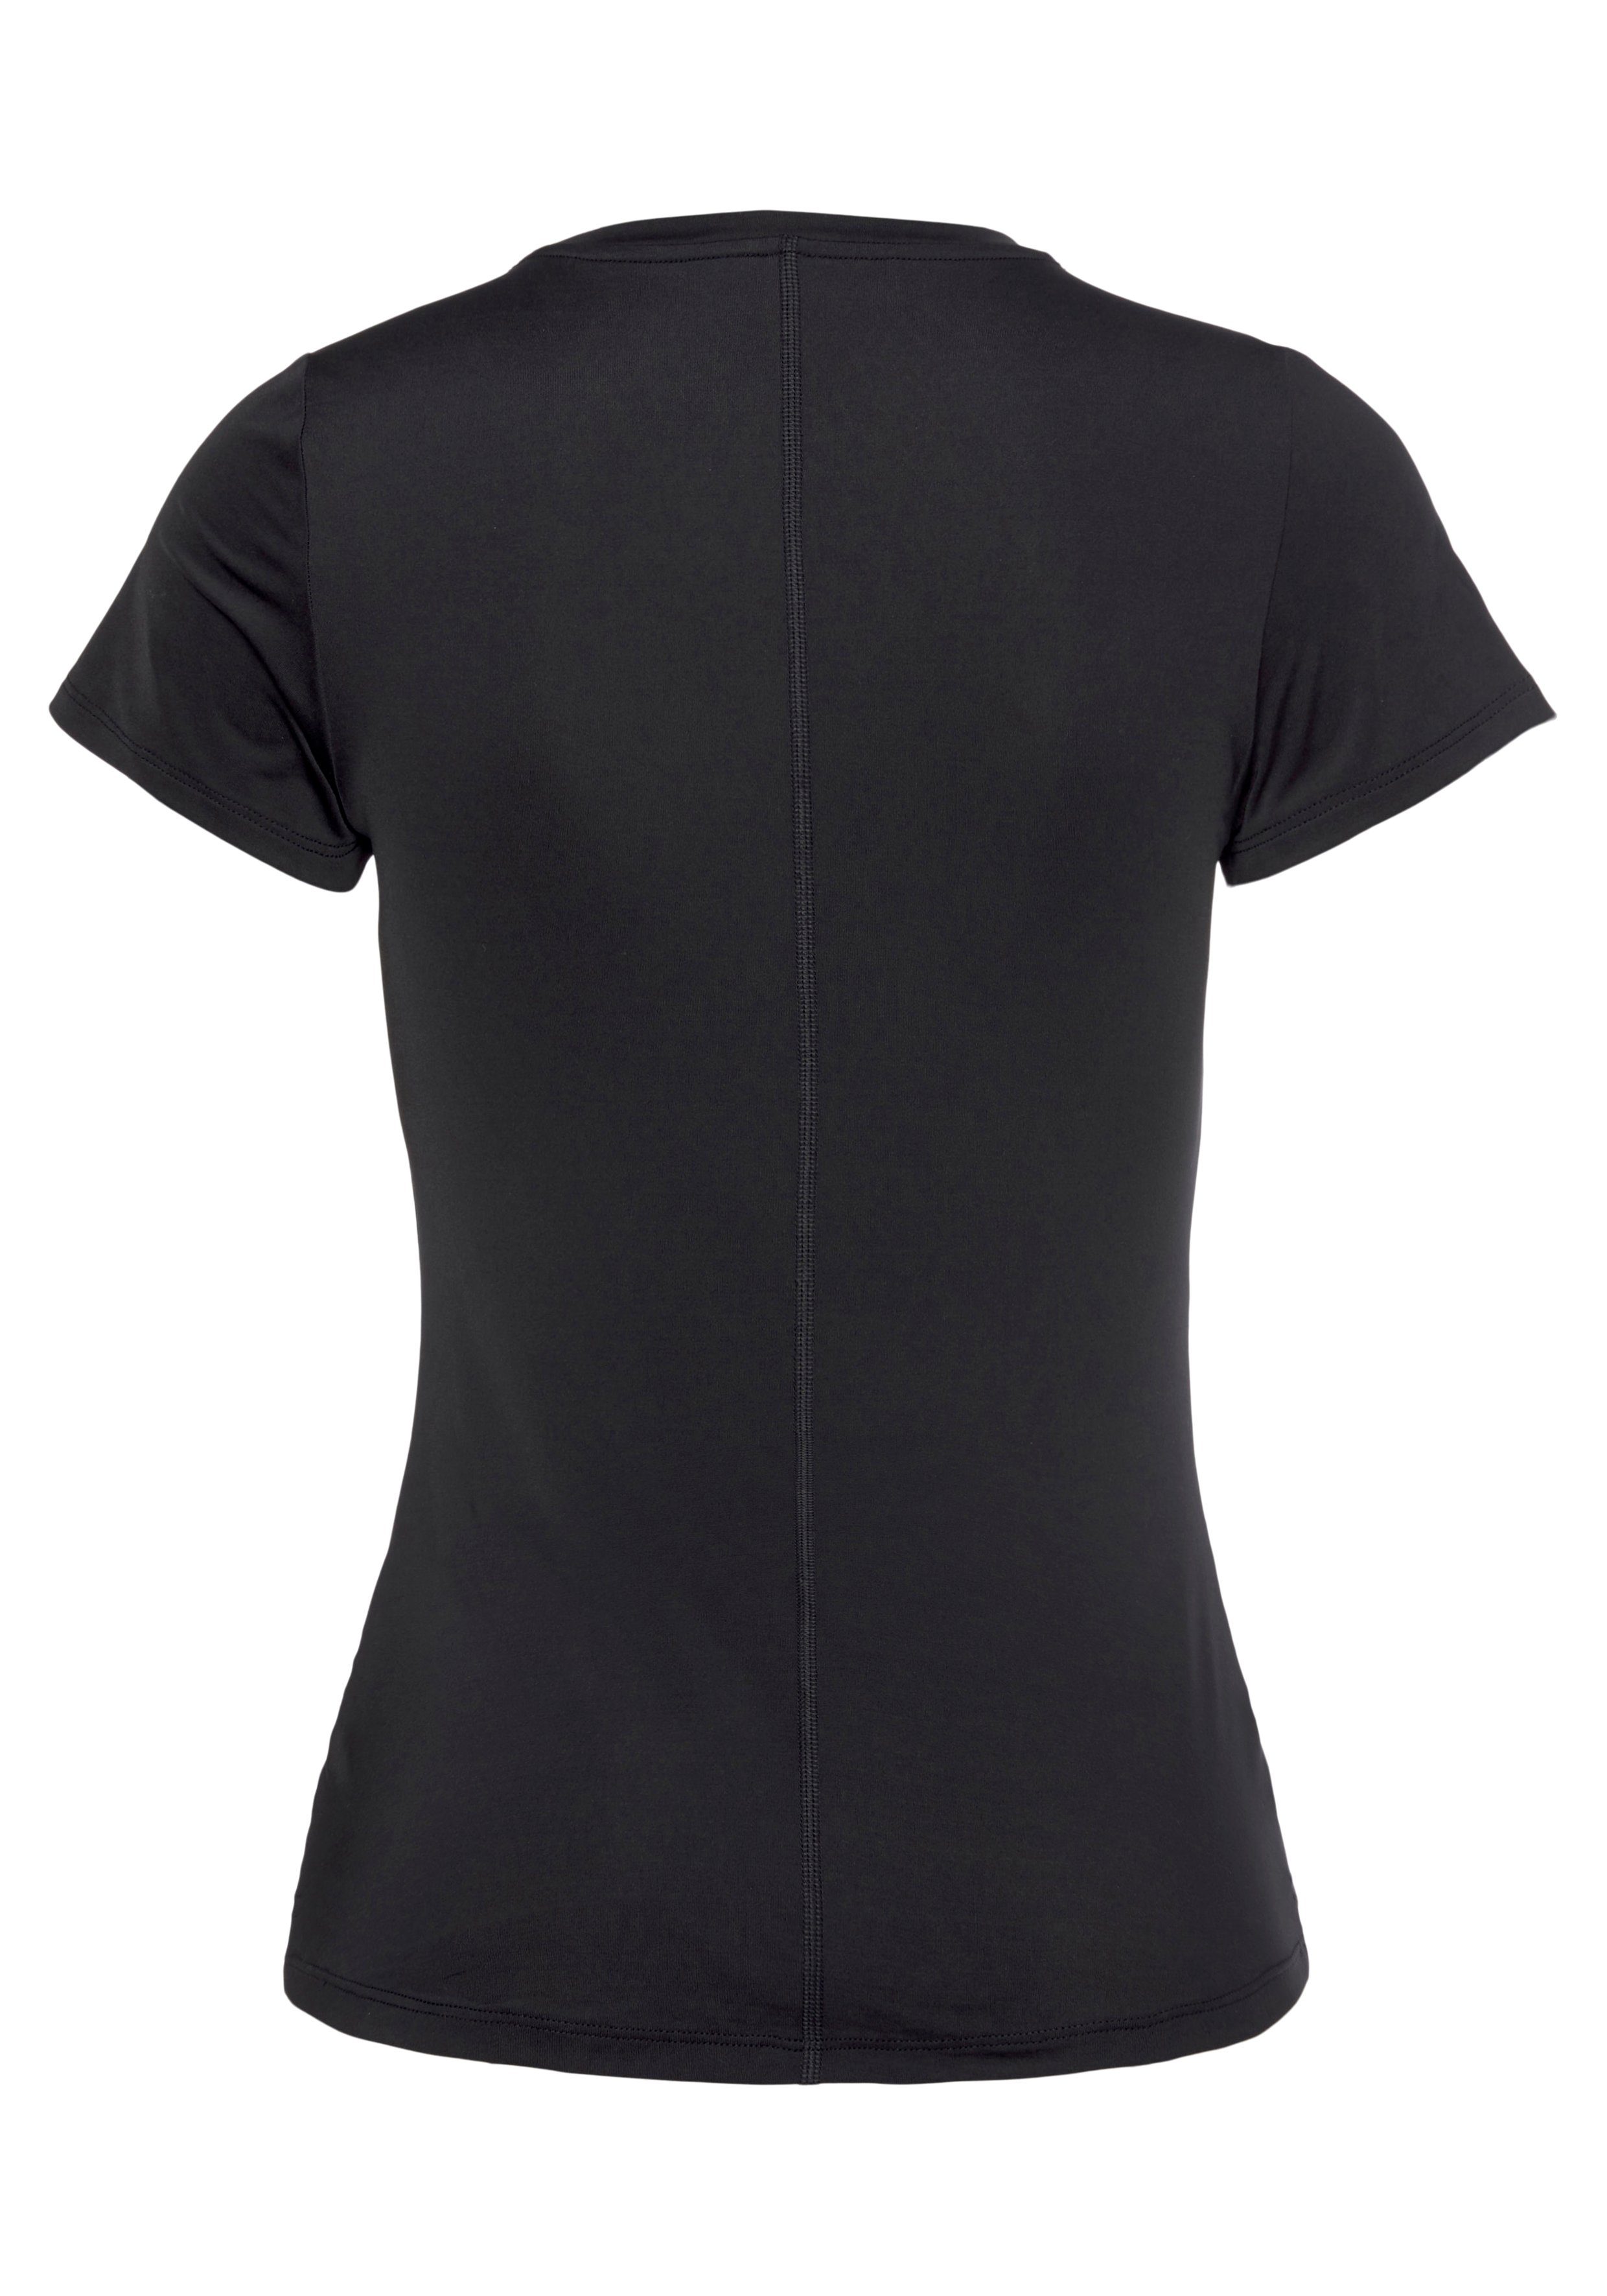 SHORT-SLEEVE WOMEN'S Trainingsshirt schwarz Nike DRI-FIT TOP SLIM FIT ONE